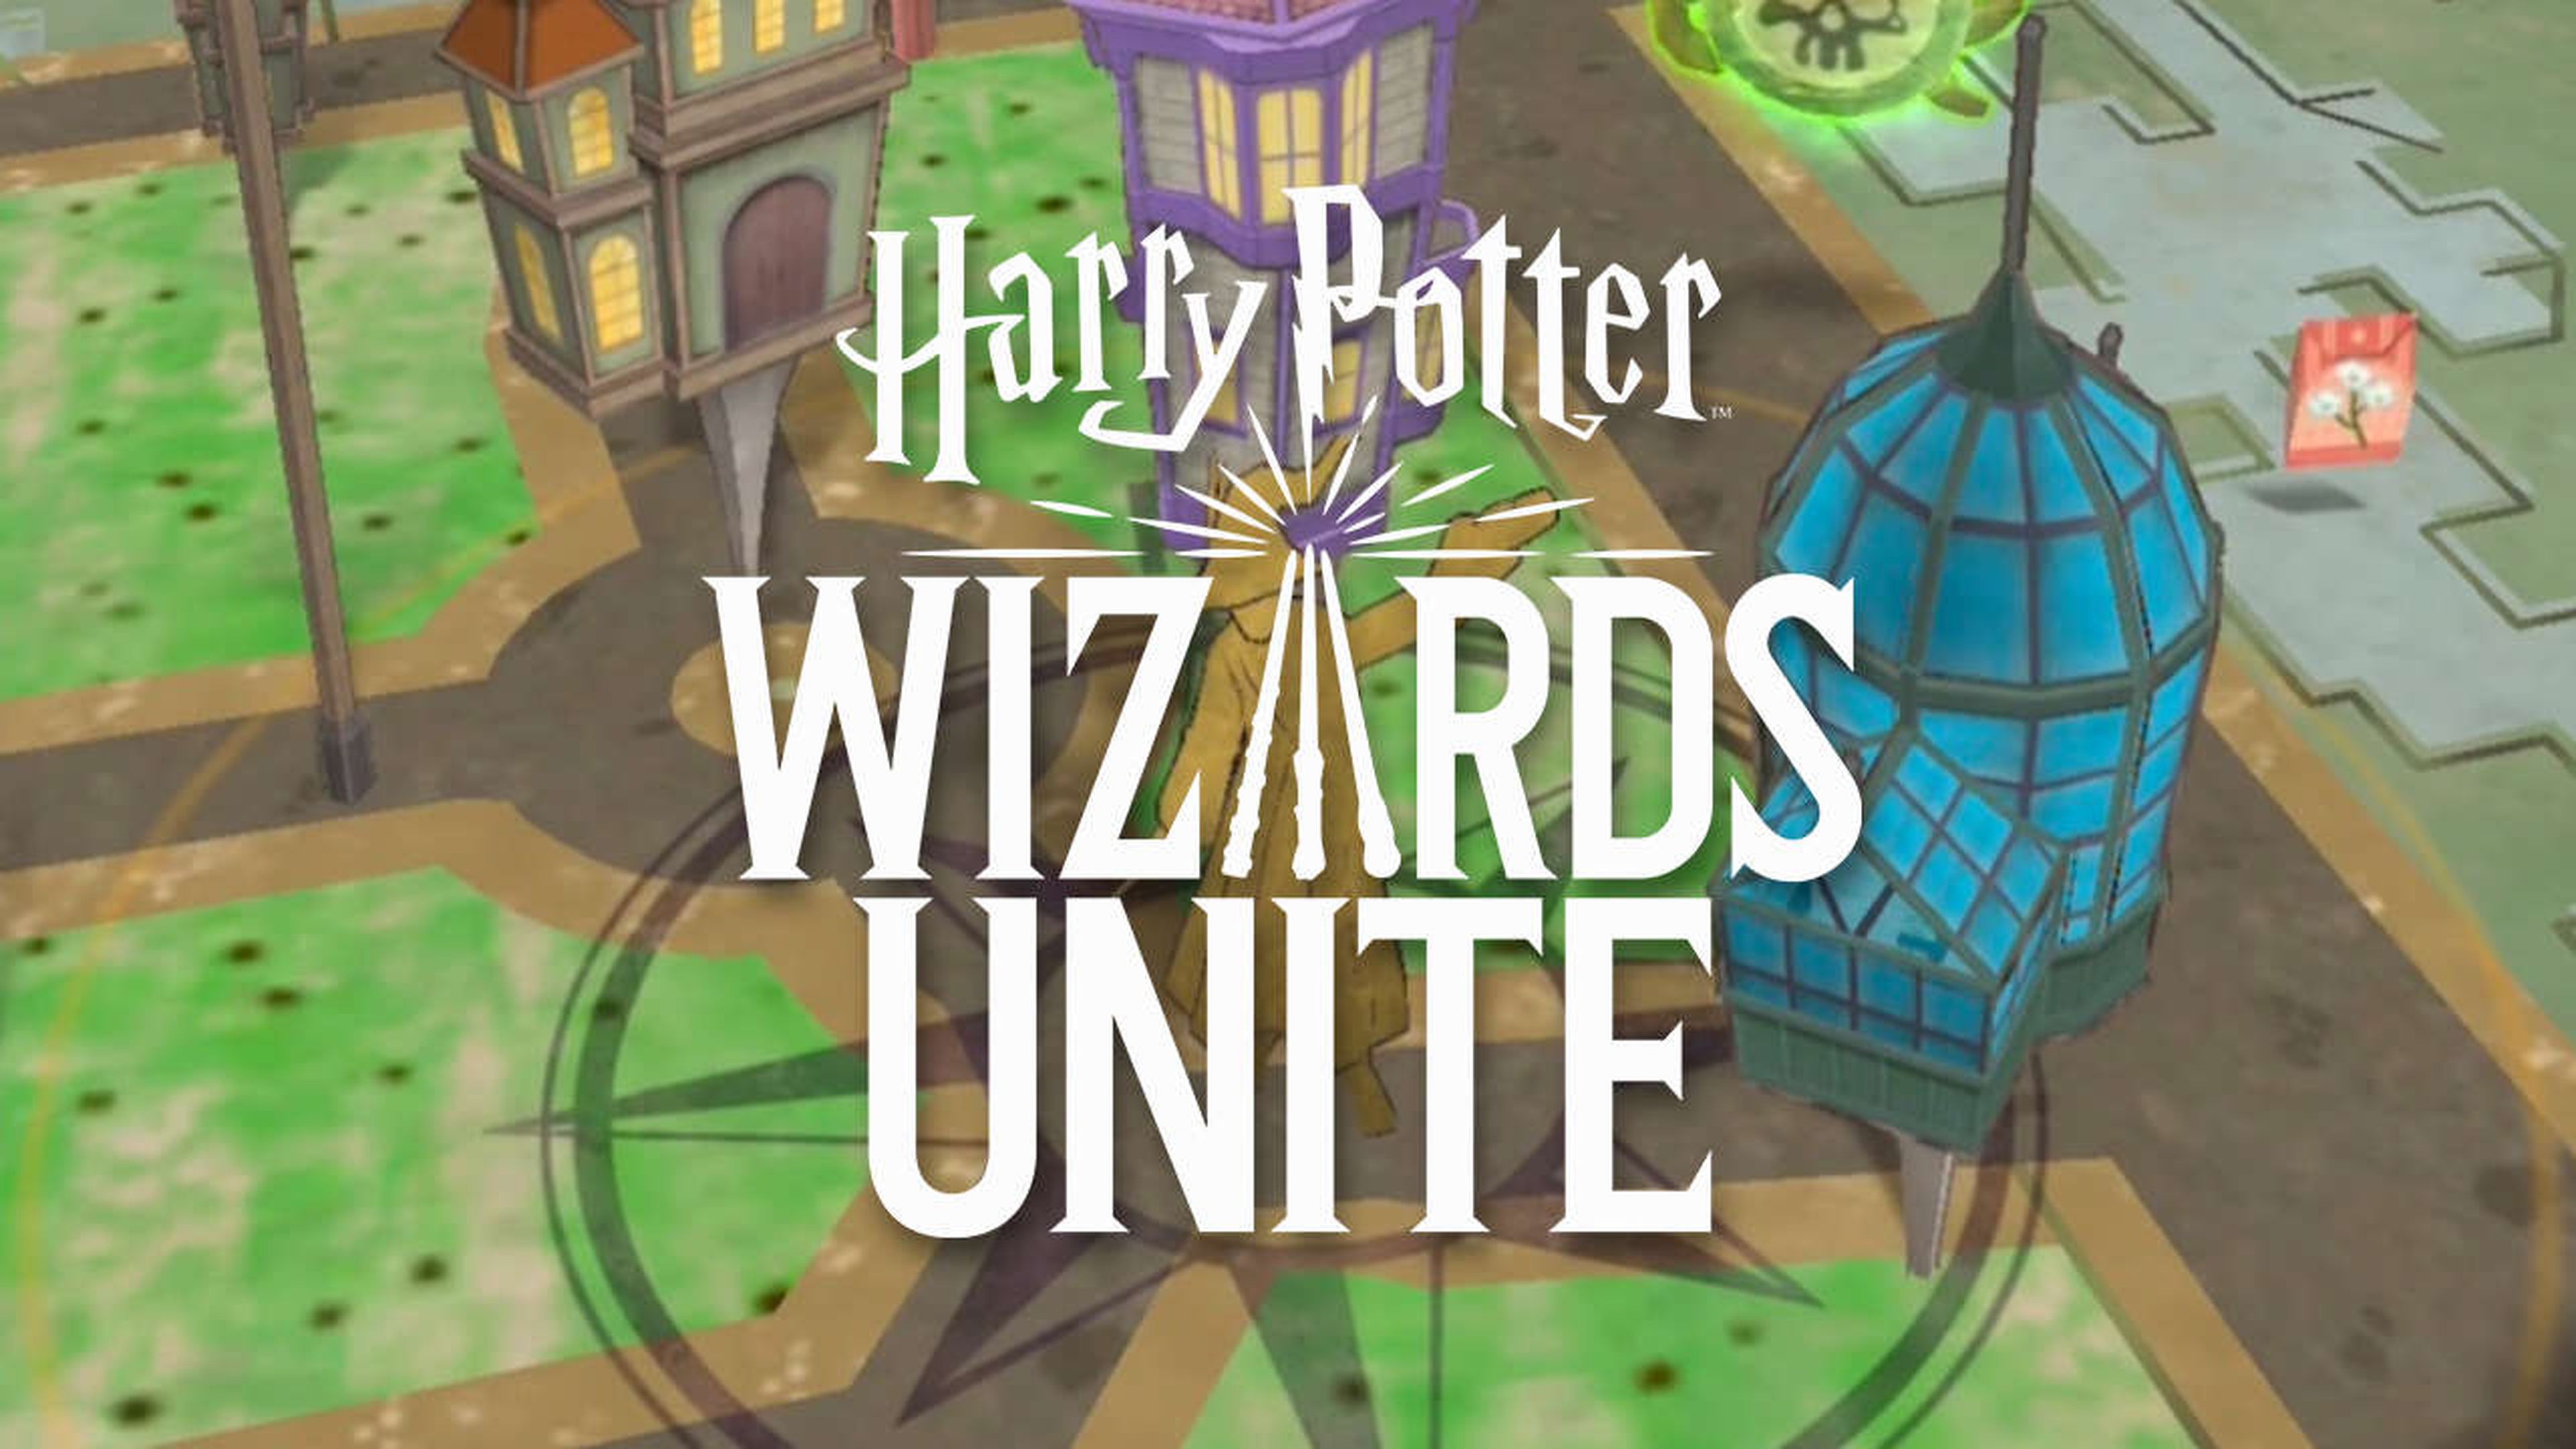 Invernaderos Harry Potter Wizards Unite